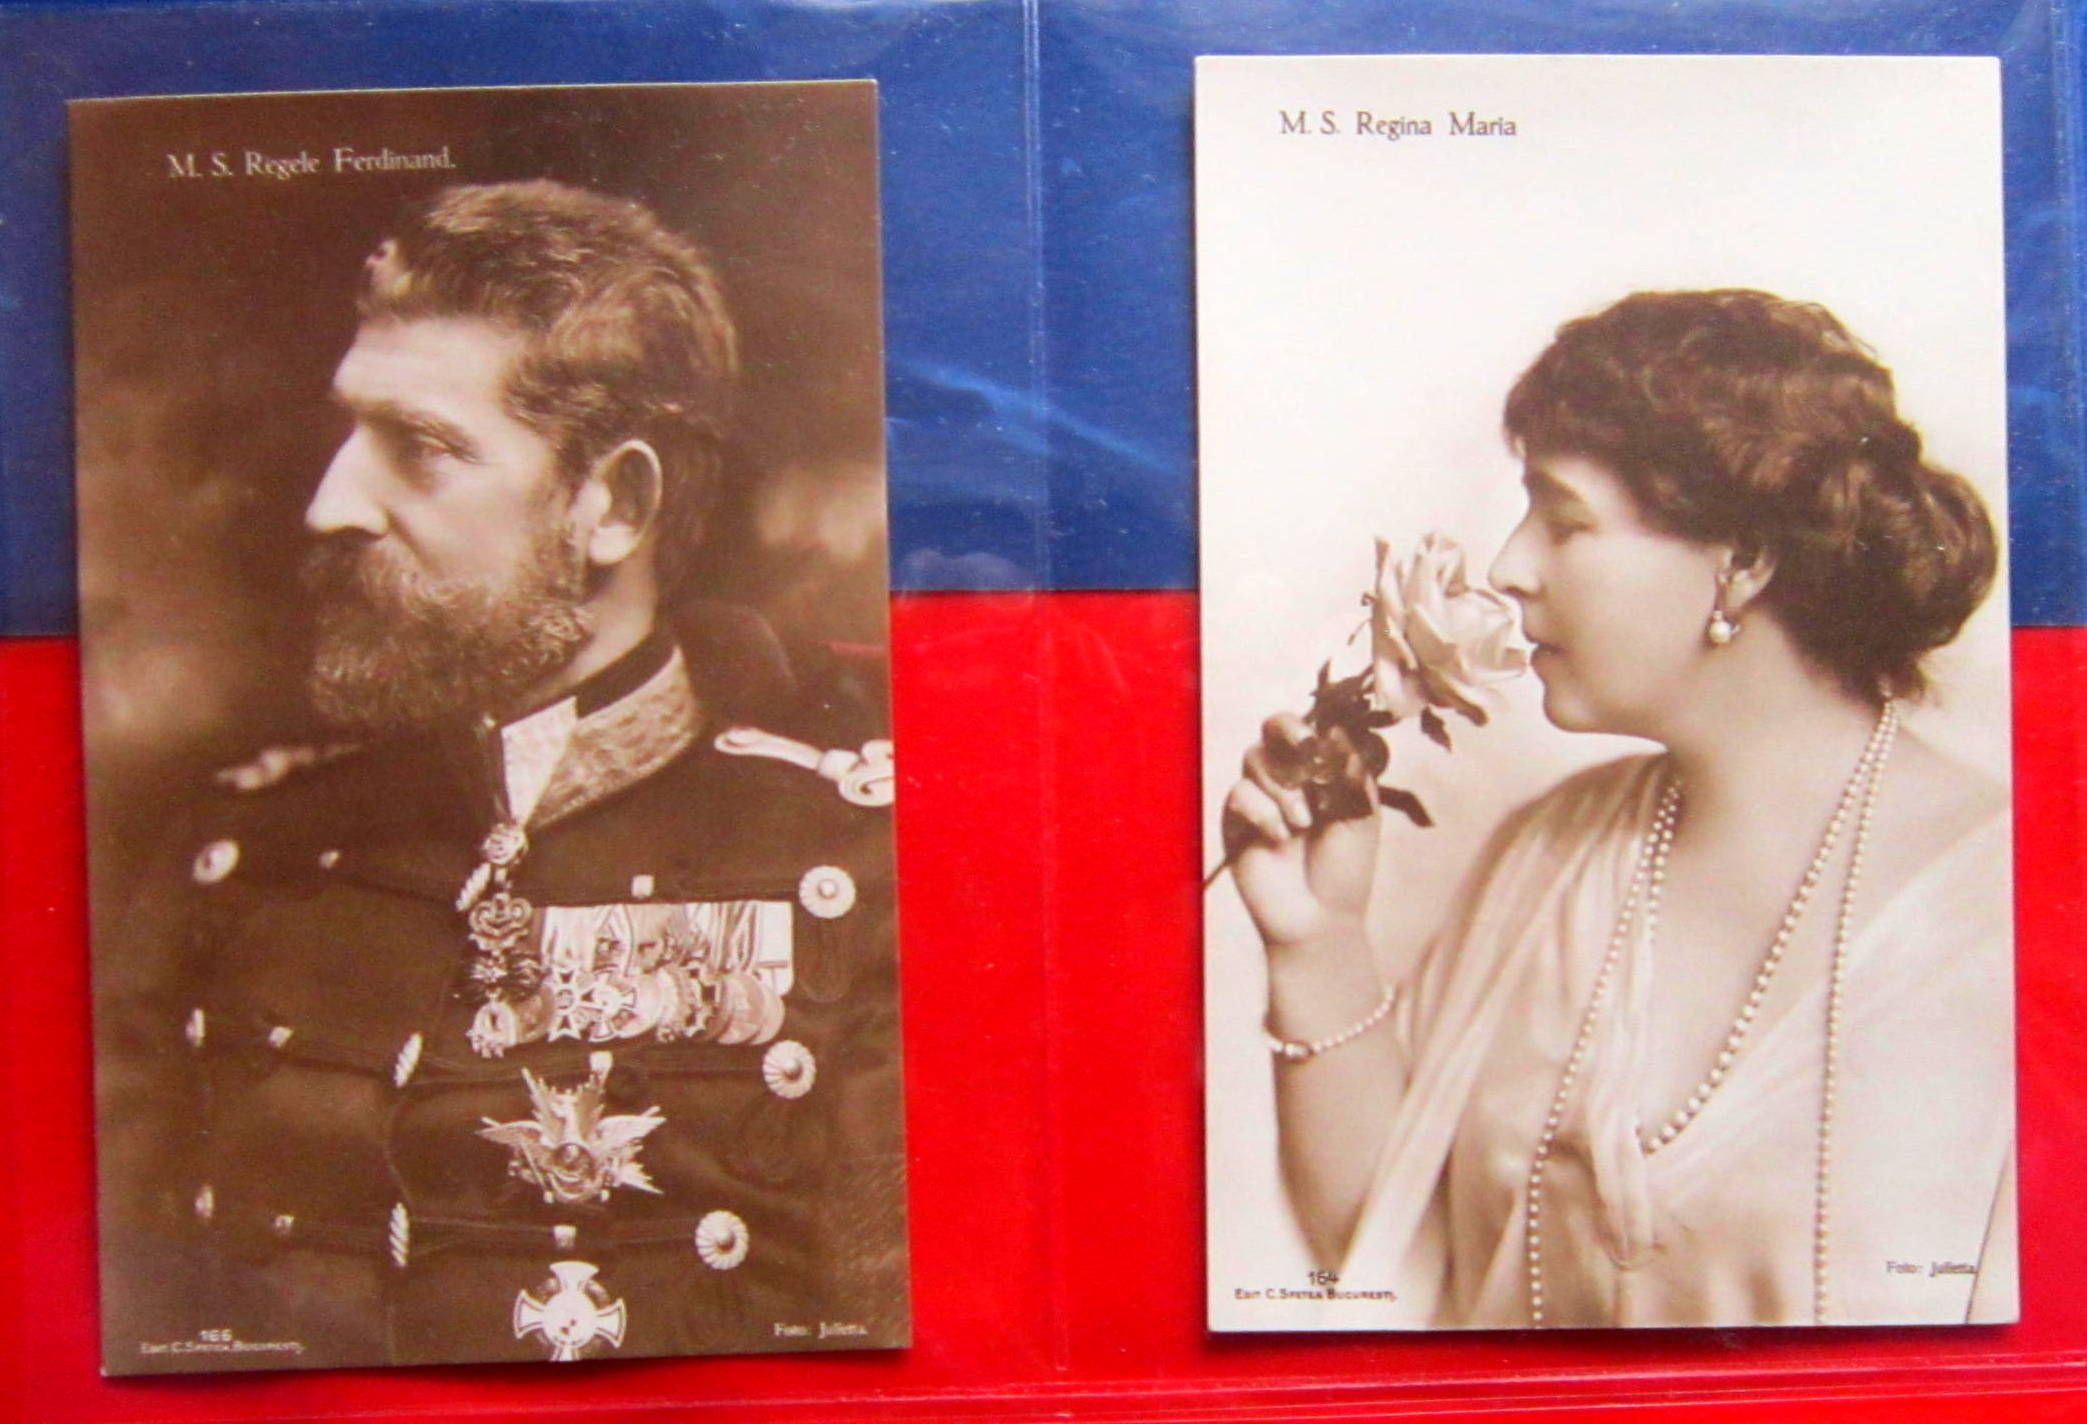 Carti postale: Regele Ferdinand si Regina Maria